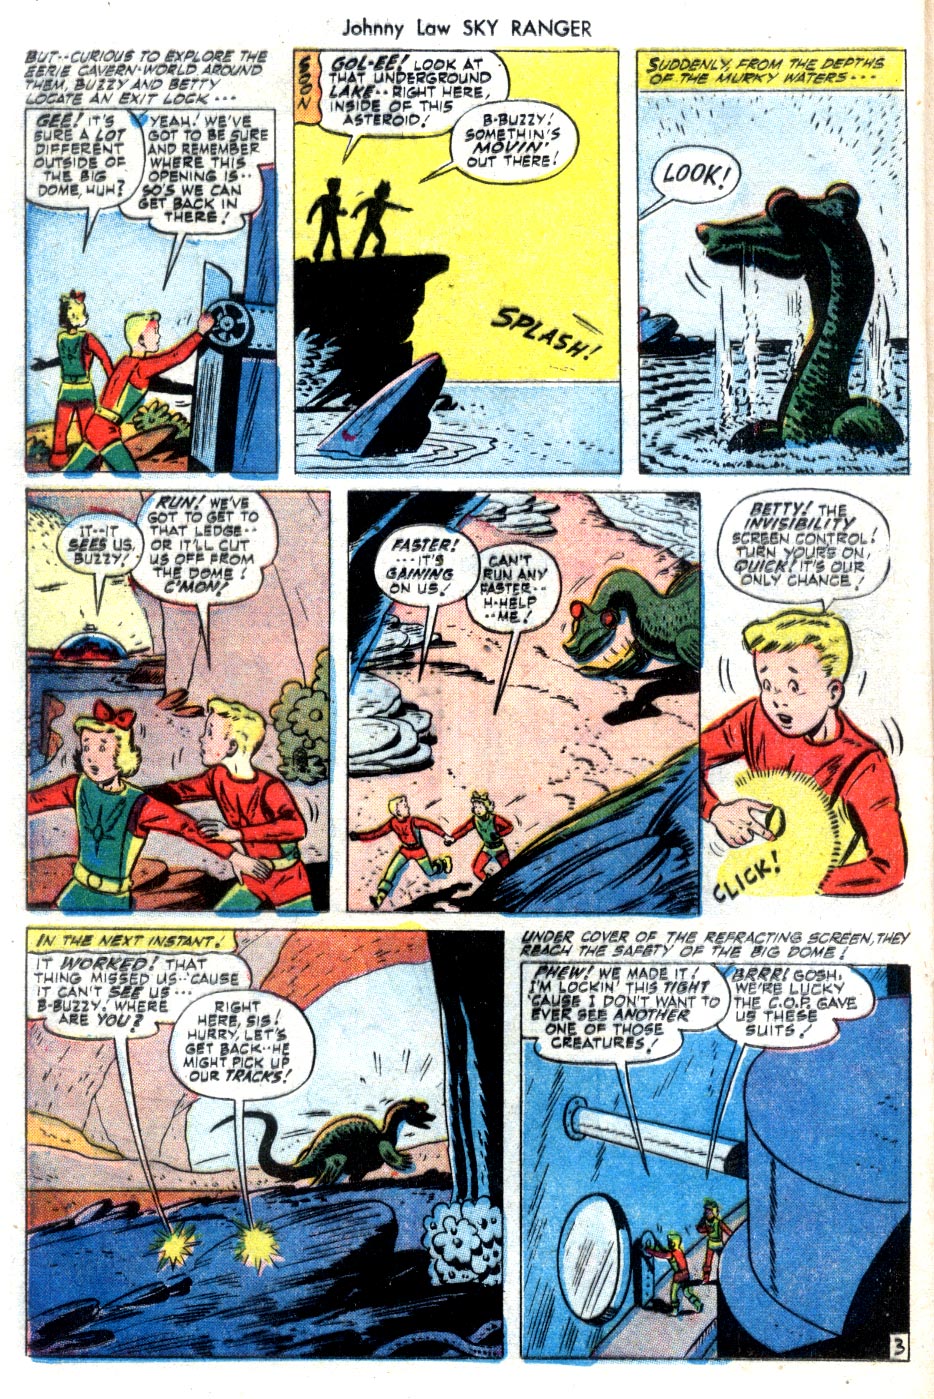 Read online Johnny Law Sky Ranger Adventures comic -  Issue #4 - 22